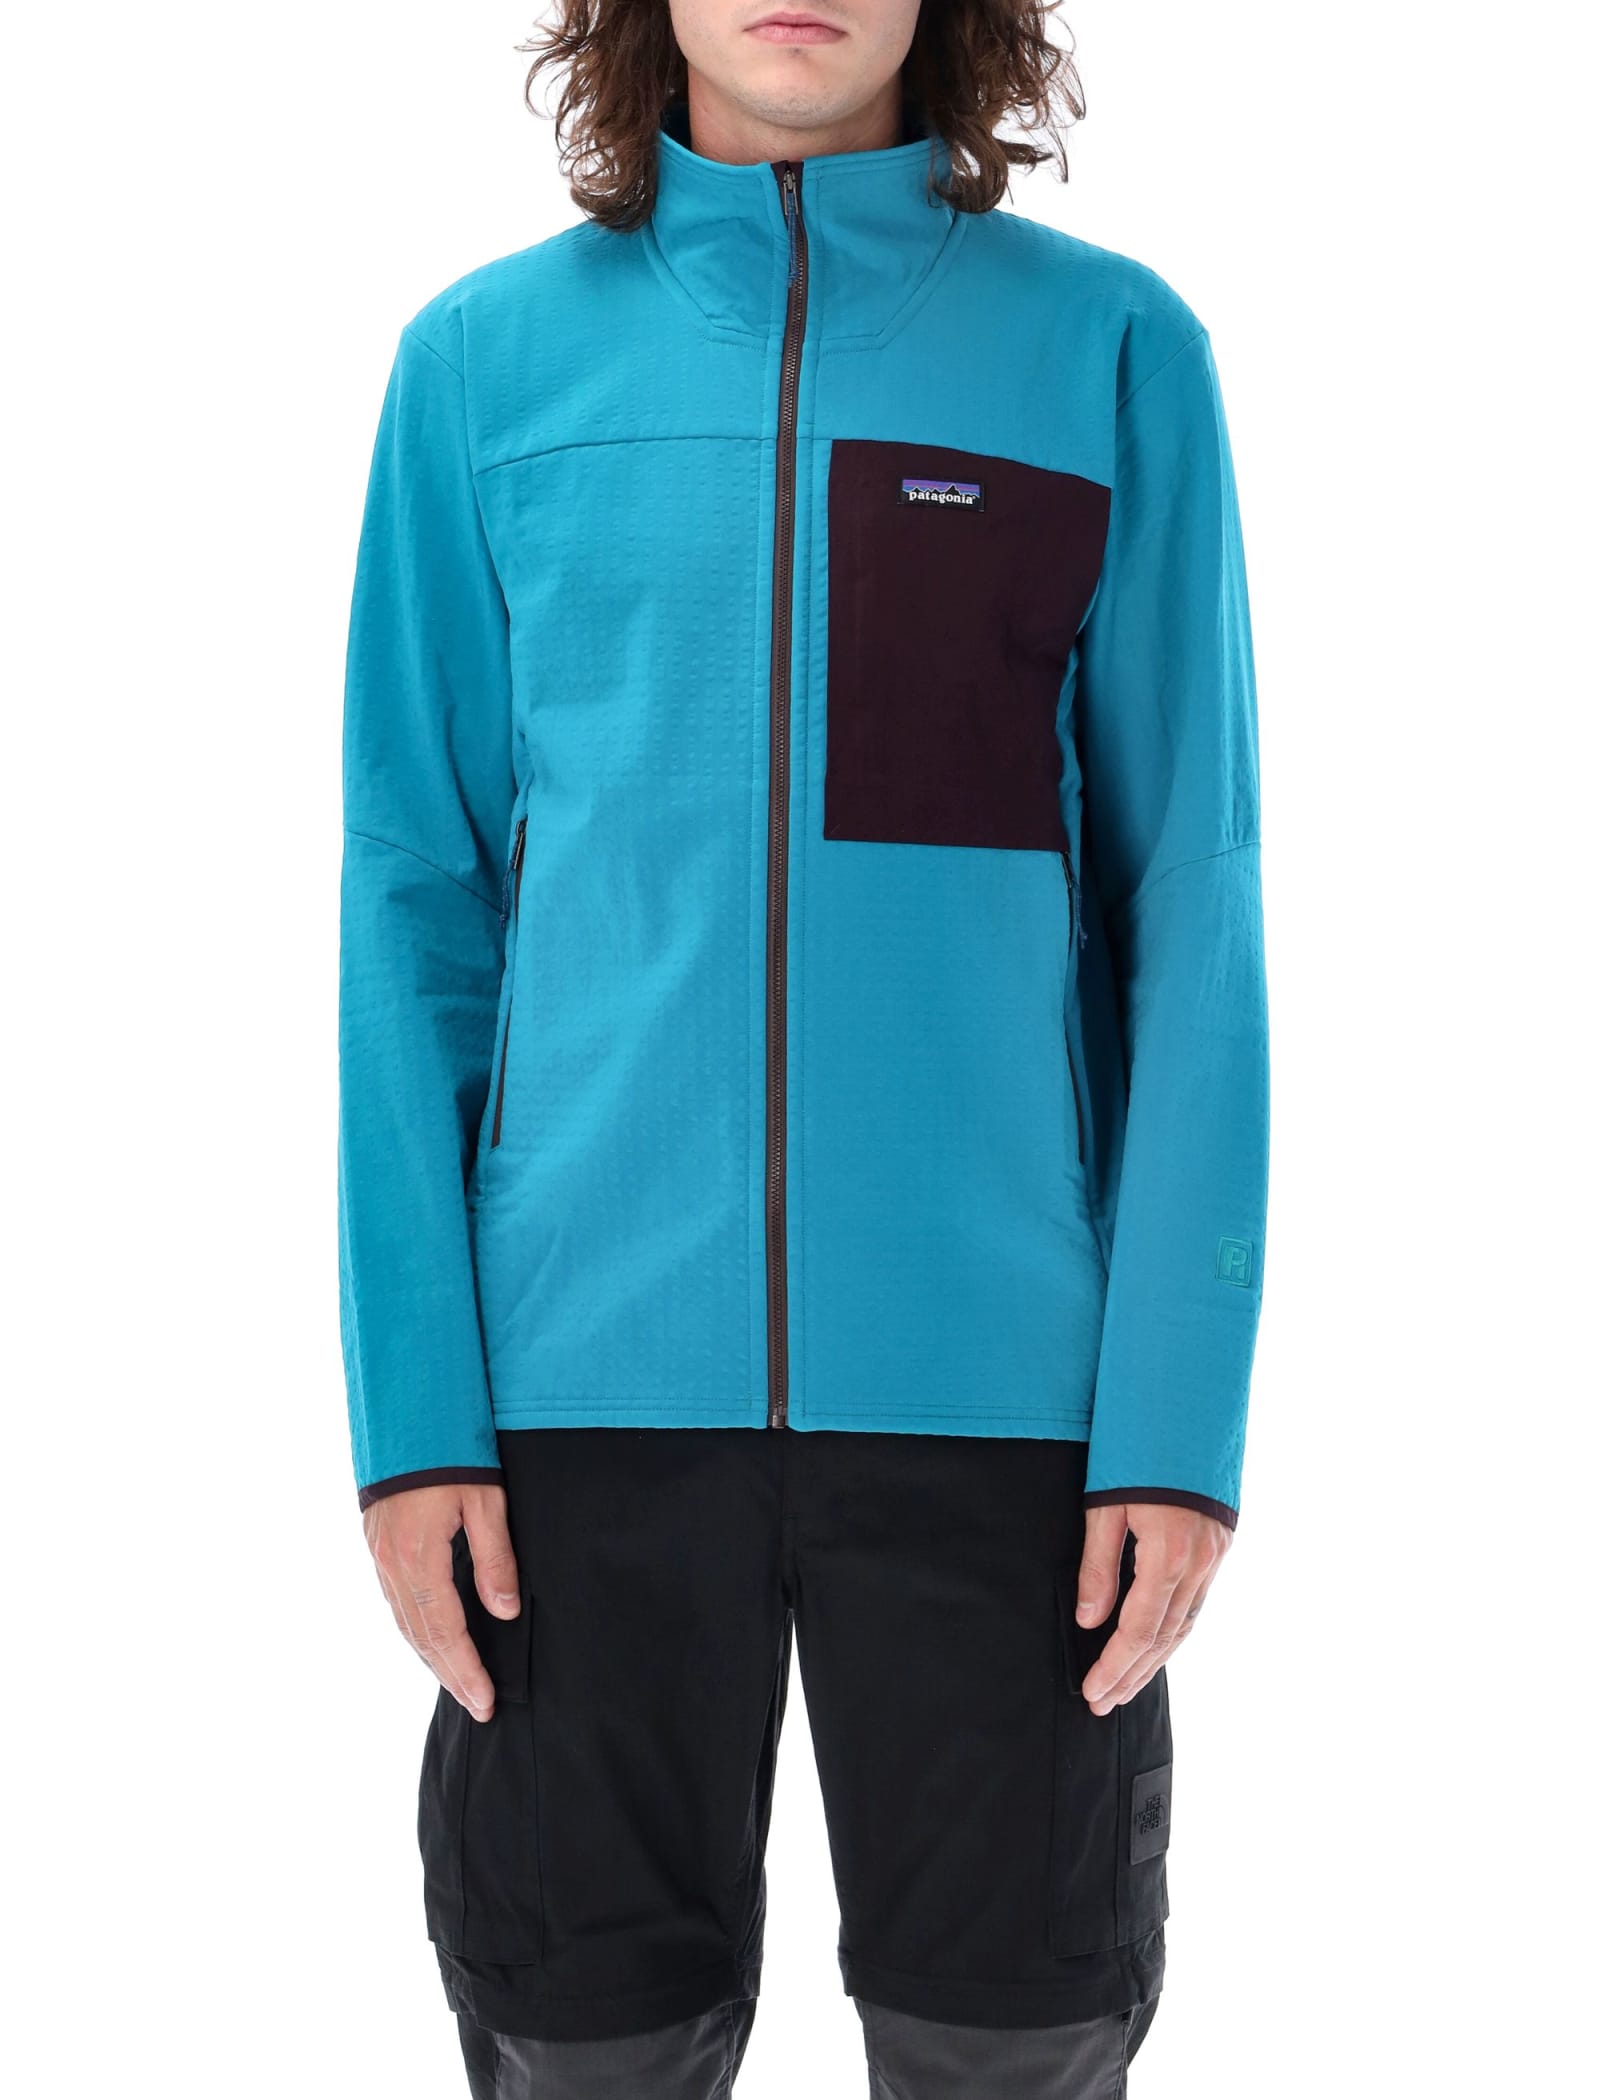 patagonia r2® techface jacket